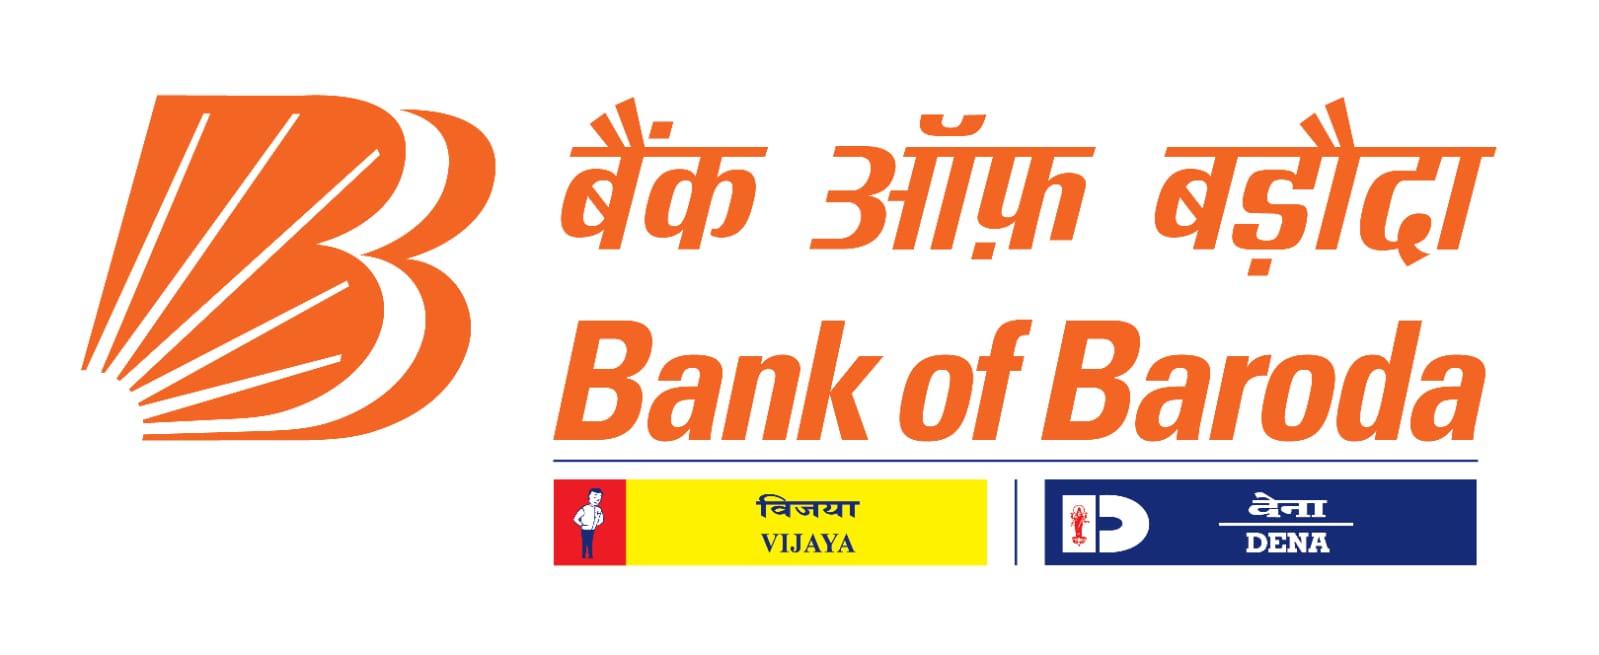 Bank of baroda hindi divash